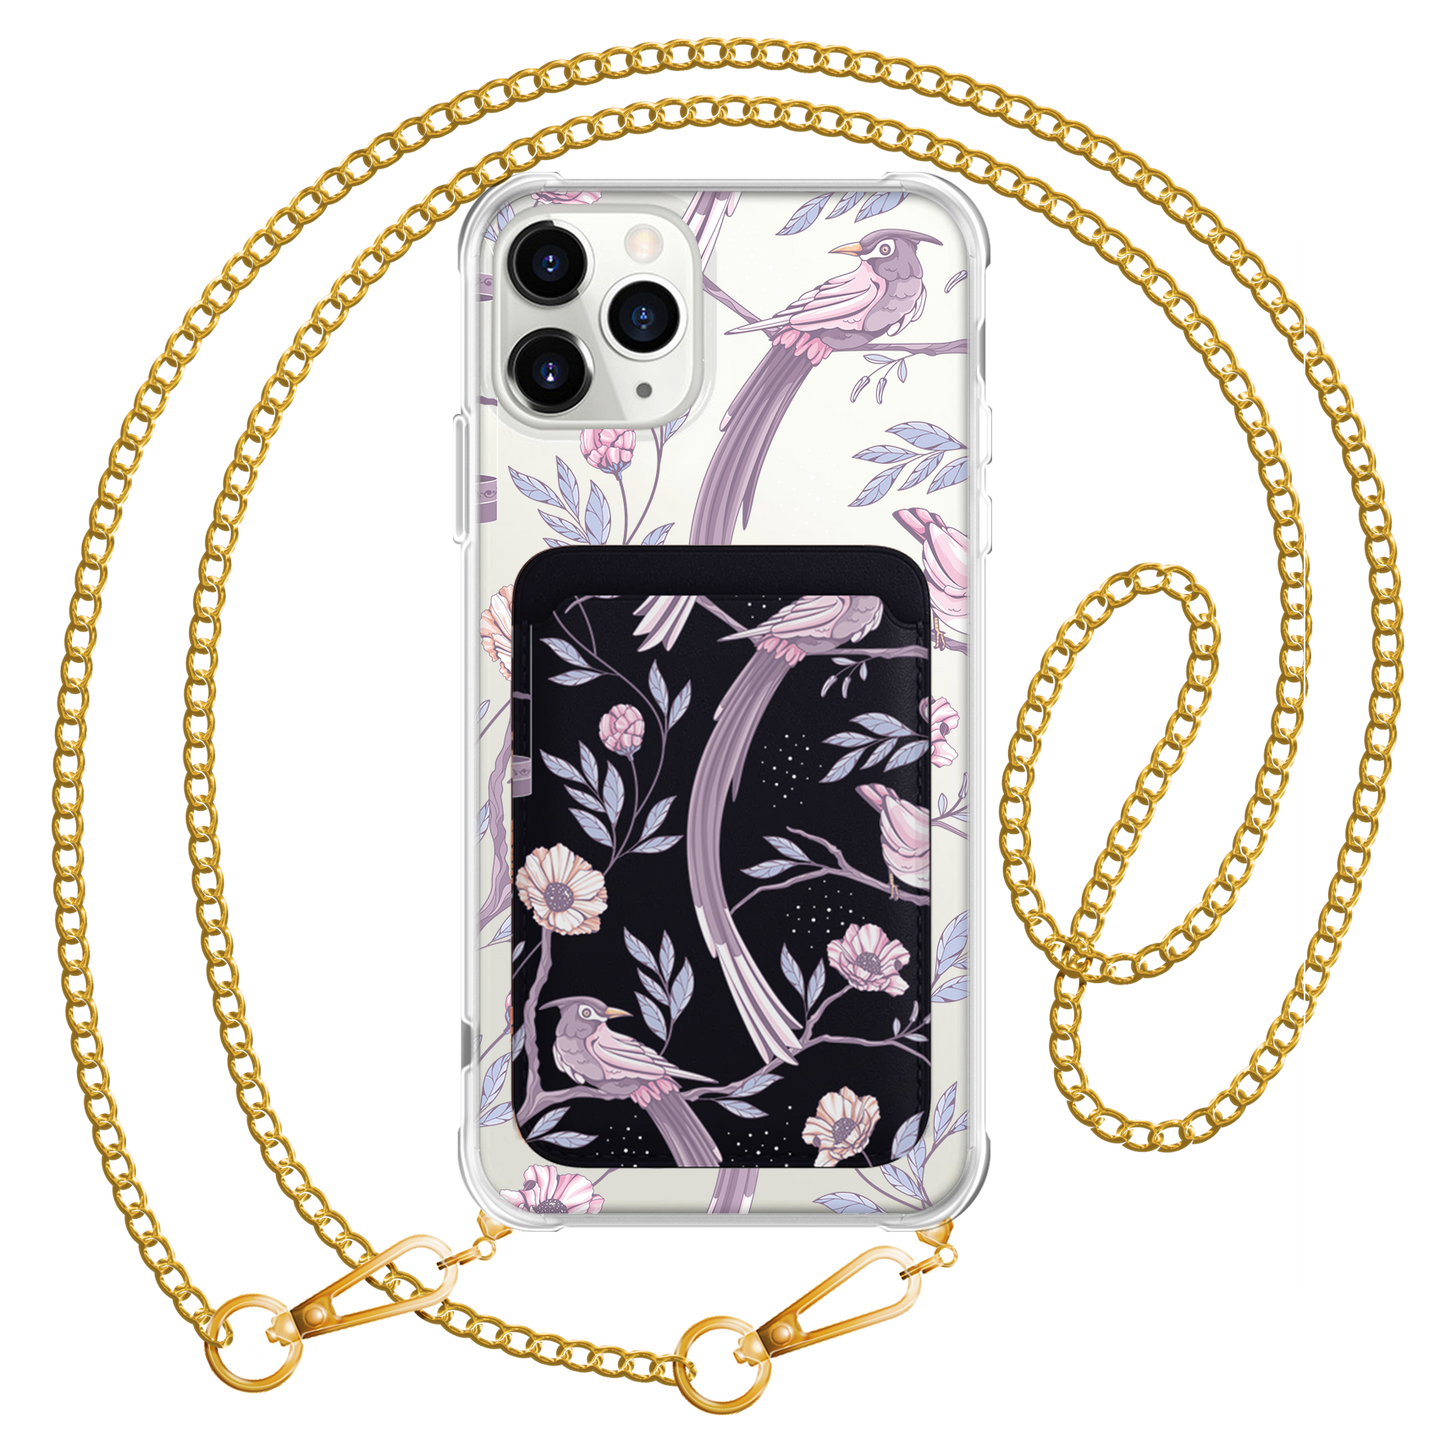 iPhone Magnetic Wallet Case - Lovebird 4.0